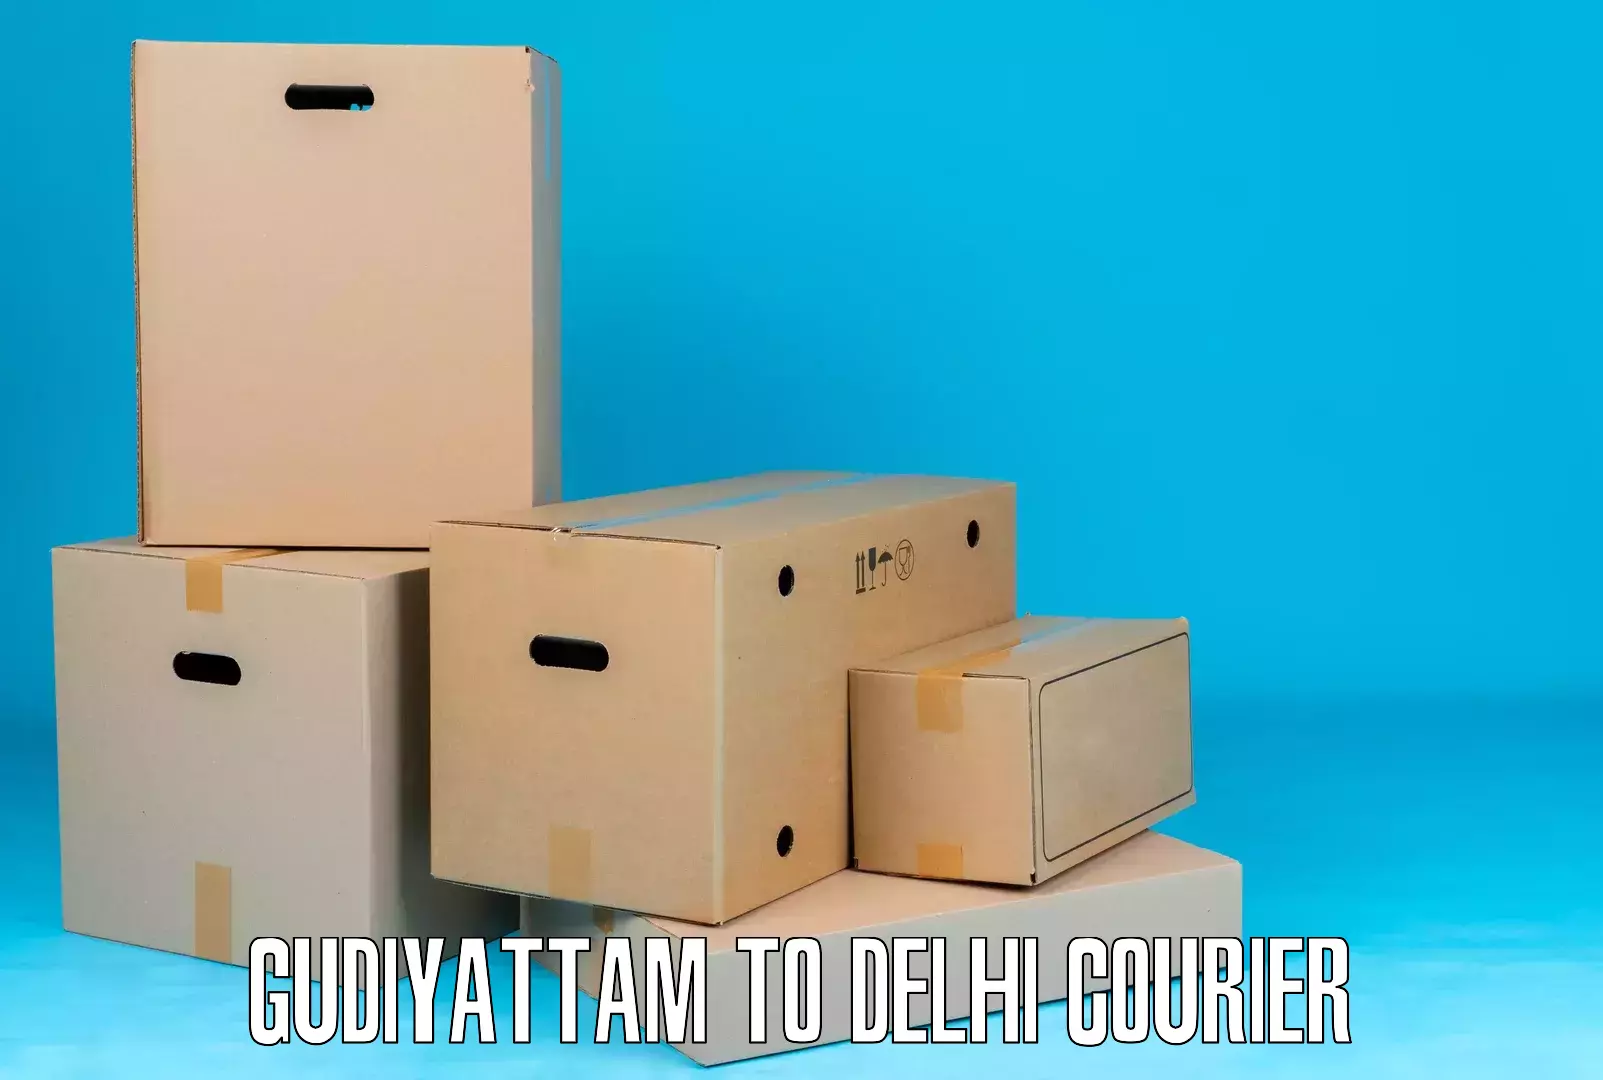 Discounted shipping Gudiyattam to Lodhi Road